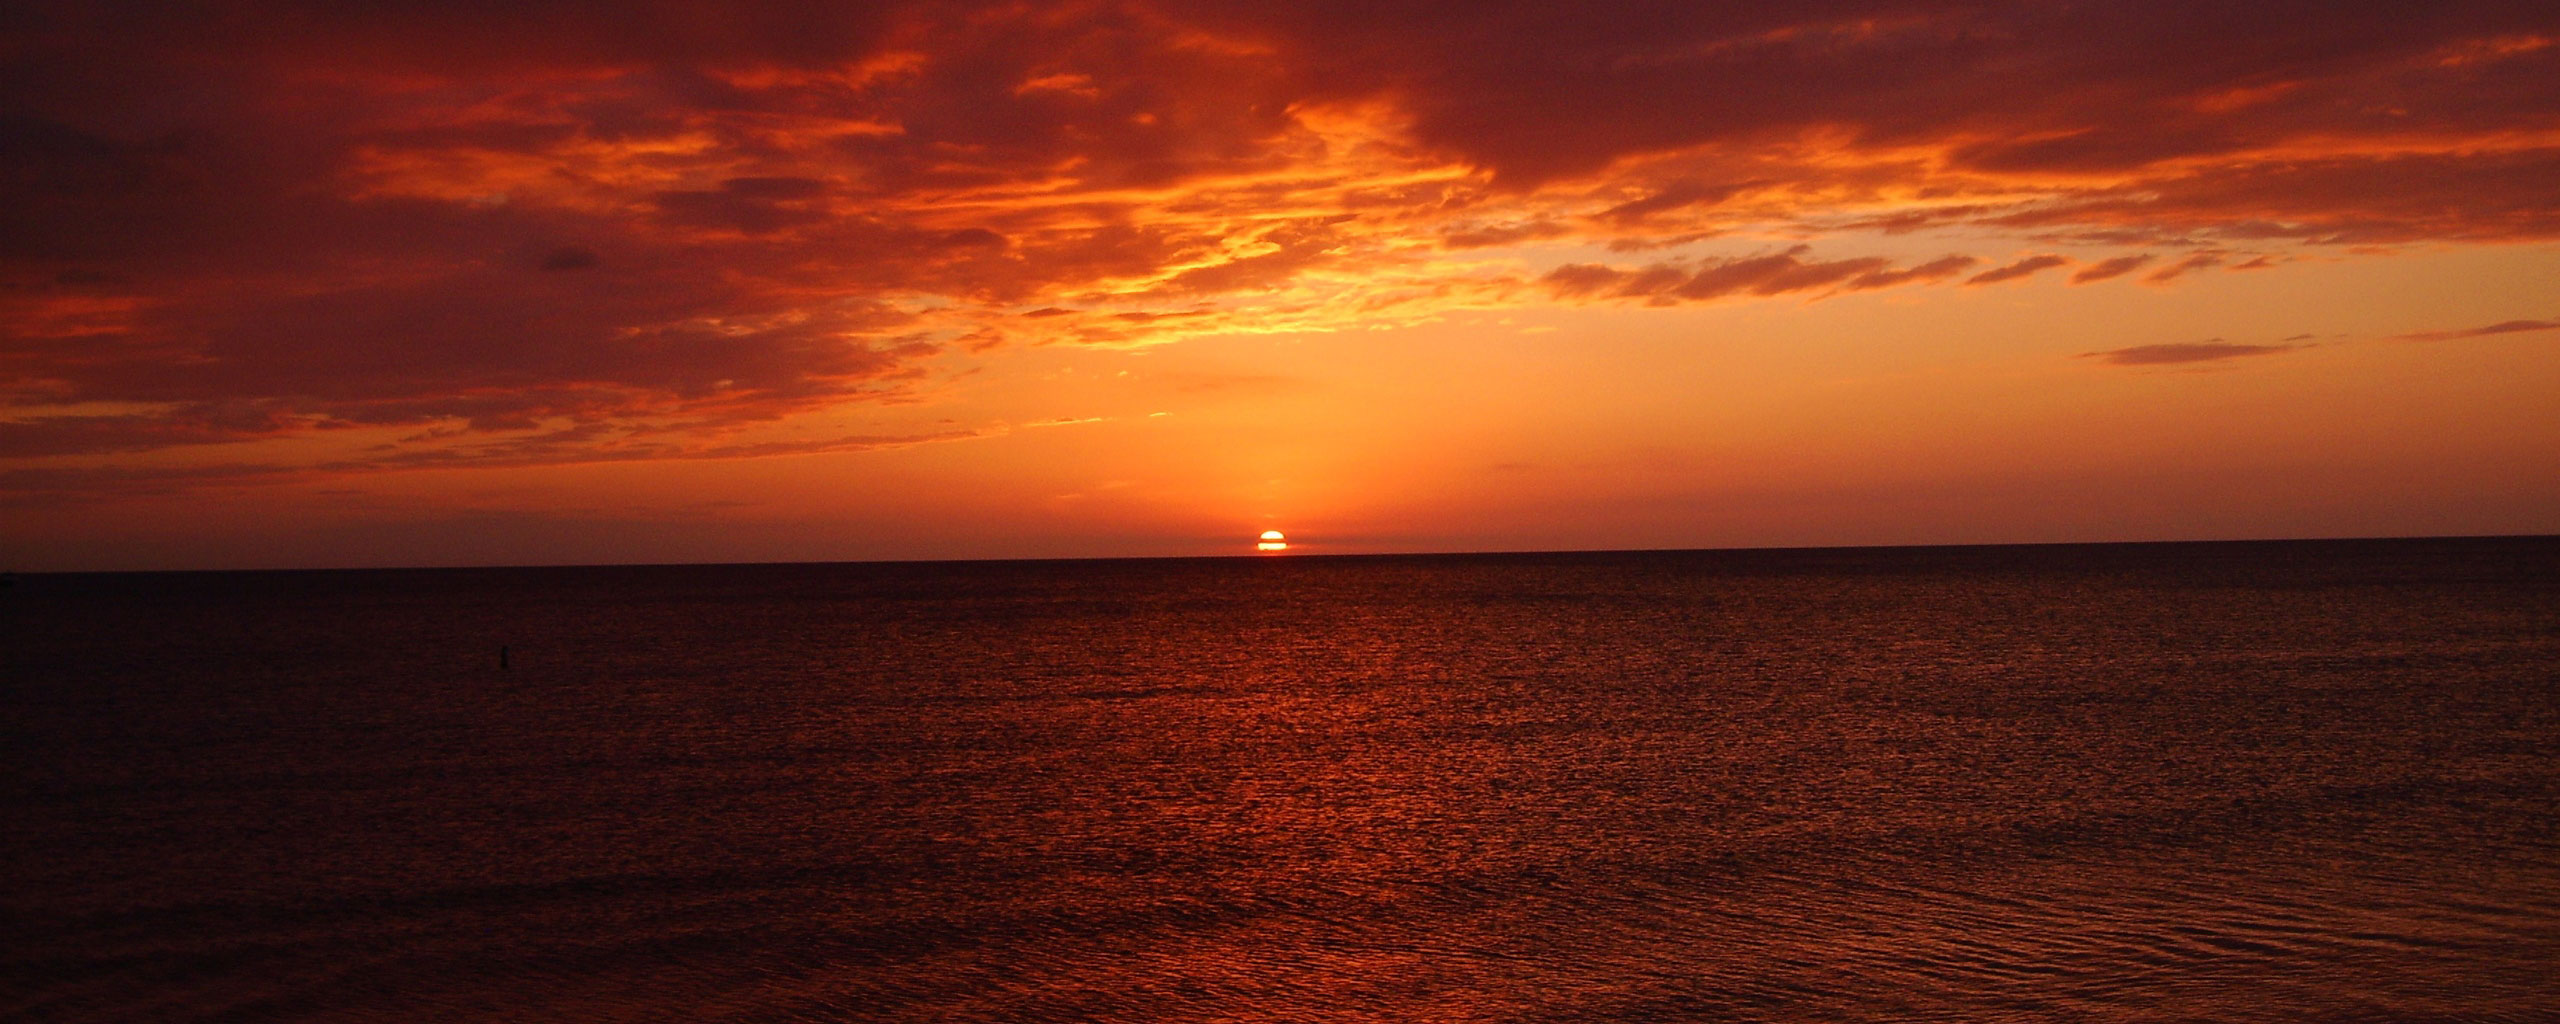 General 2560x1024 wide screen sunset sea horizon sky clouds sunlight panorama